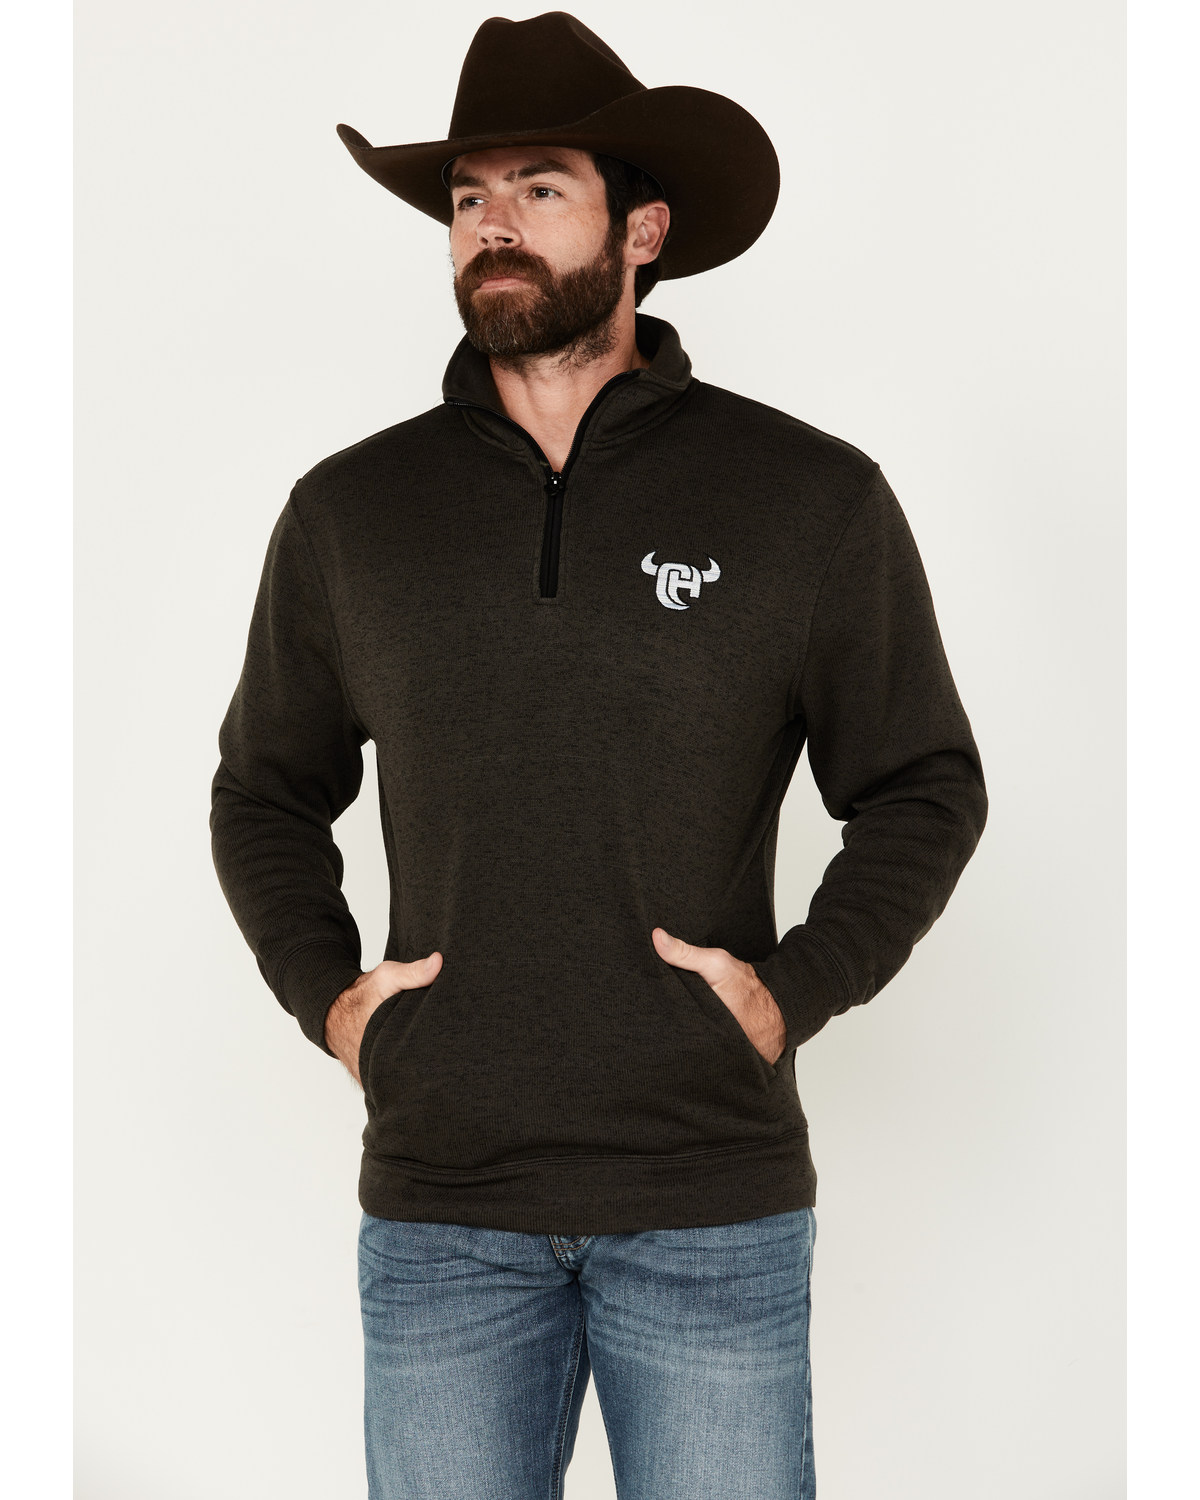 Cowboy Hardware Men's Speckle Logo 1/4 Zip Pullover